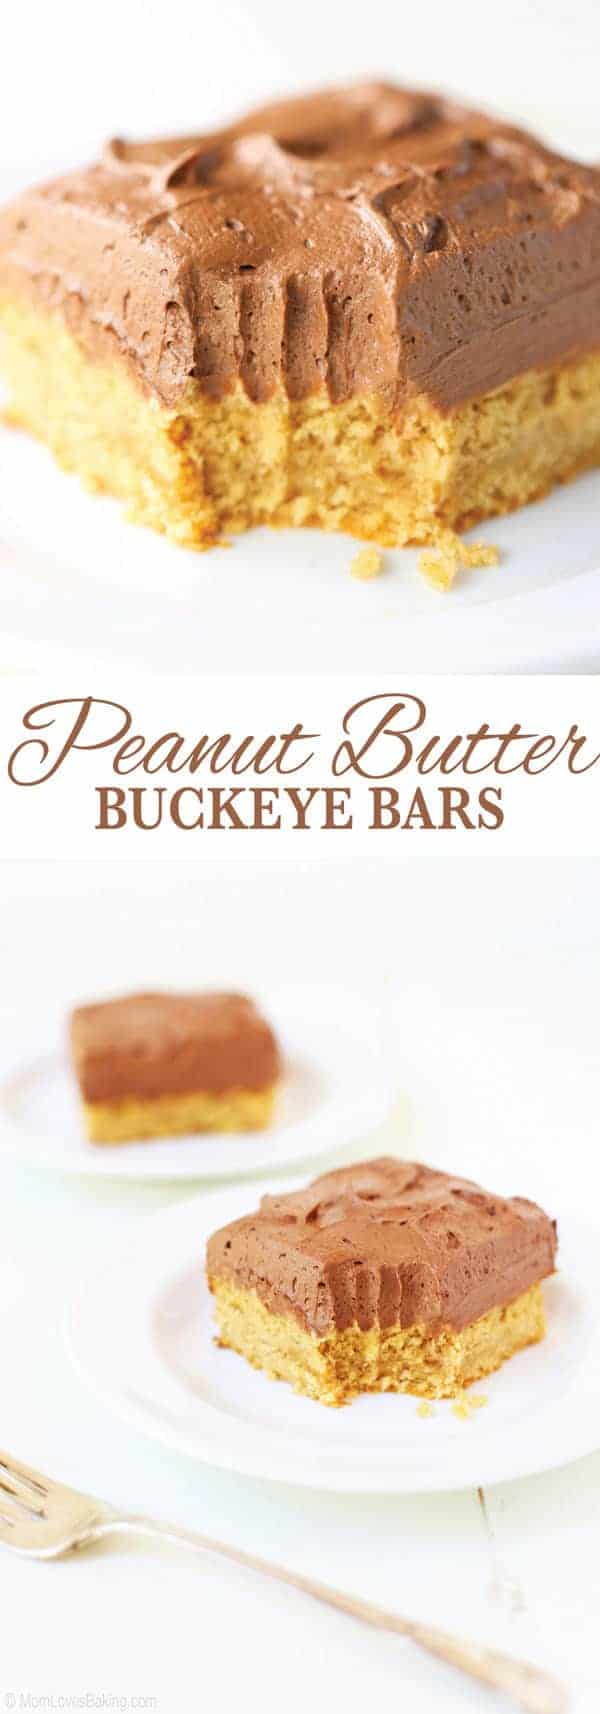 Peanut Butter Buckeye Bars